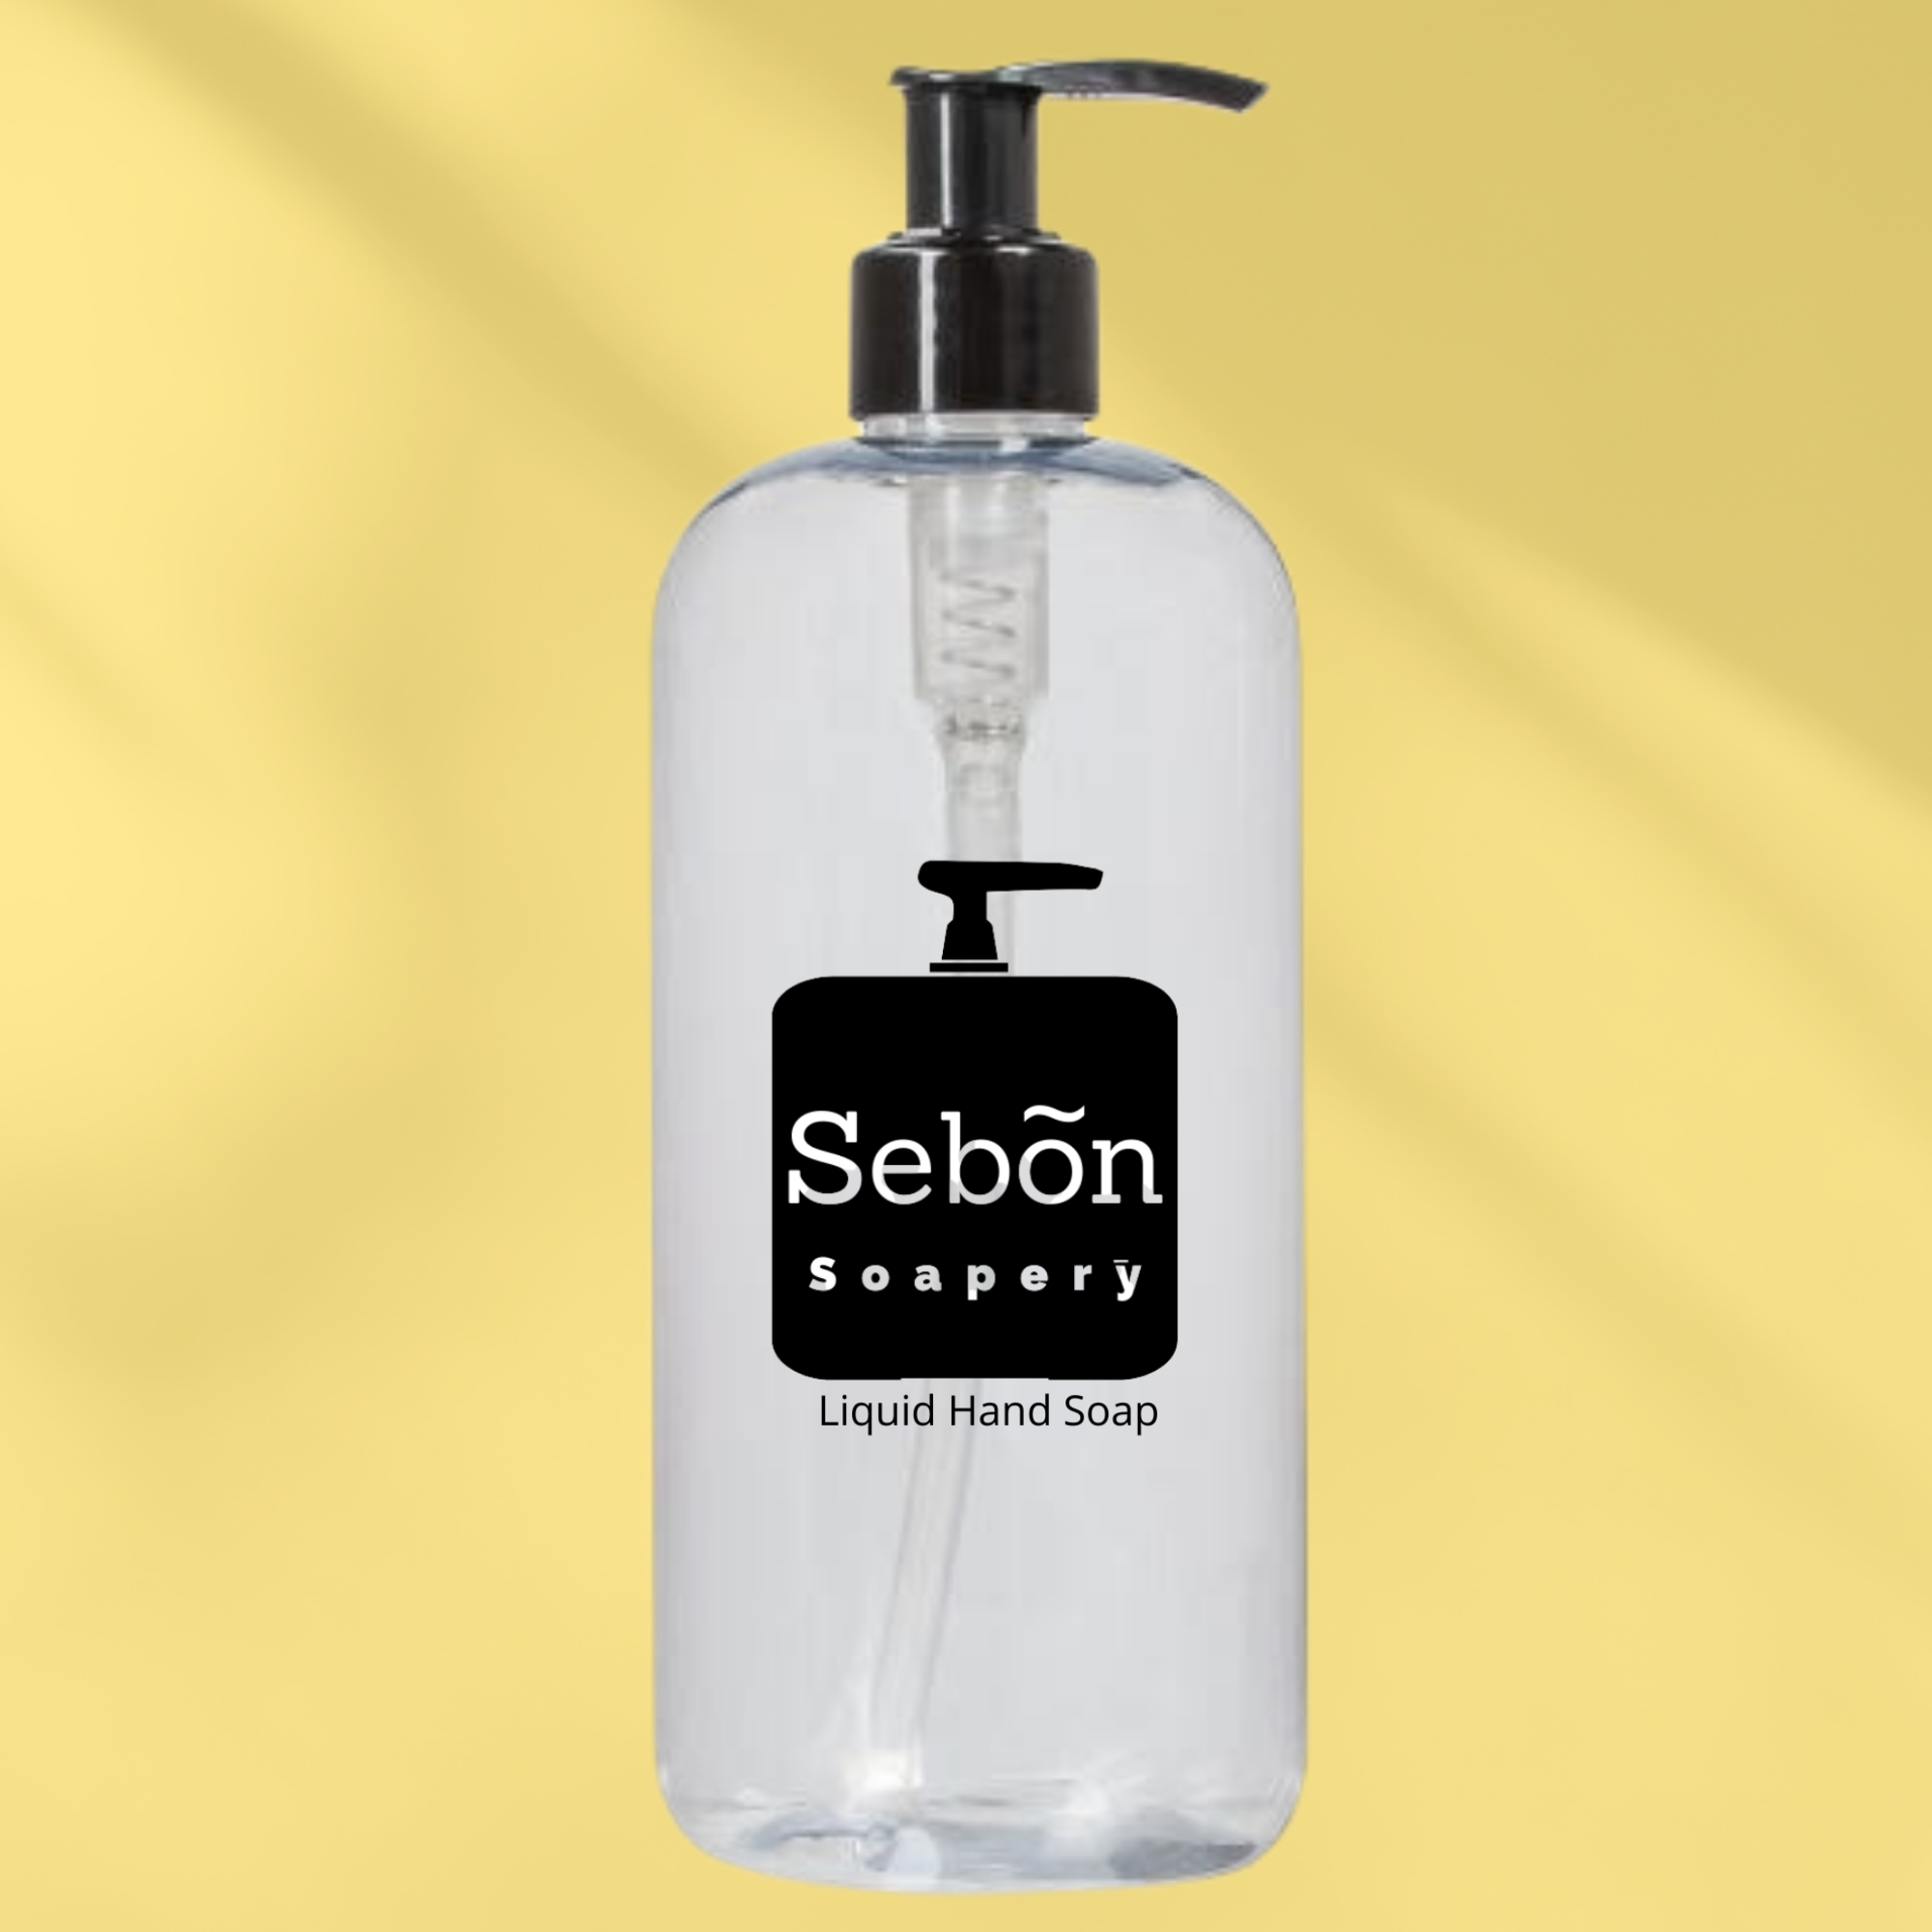 Sebon Blood Orange & Bergamot Scented Liquid Hand Soap with Olive Oil